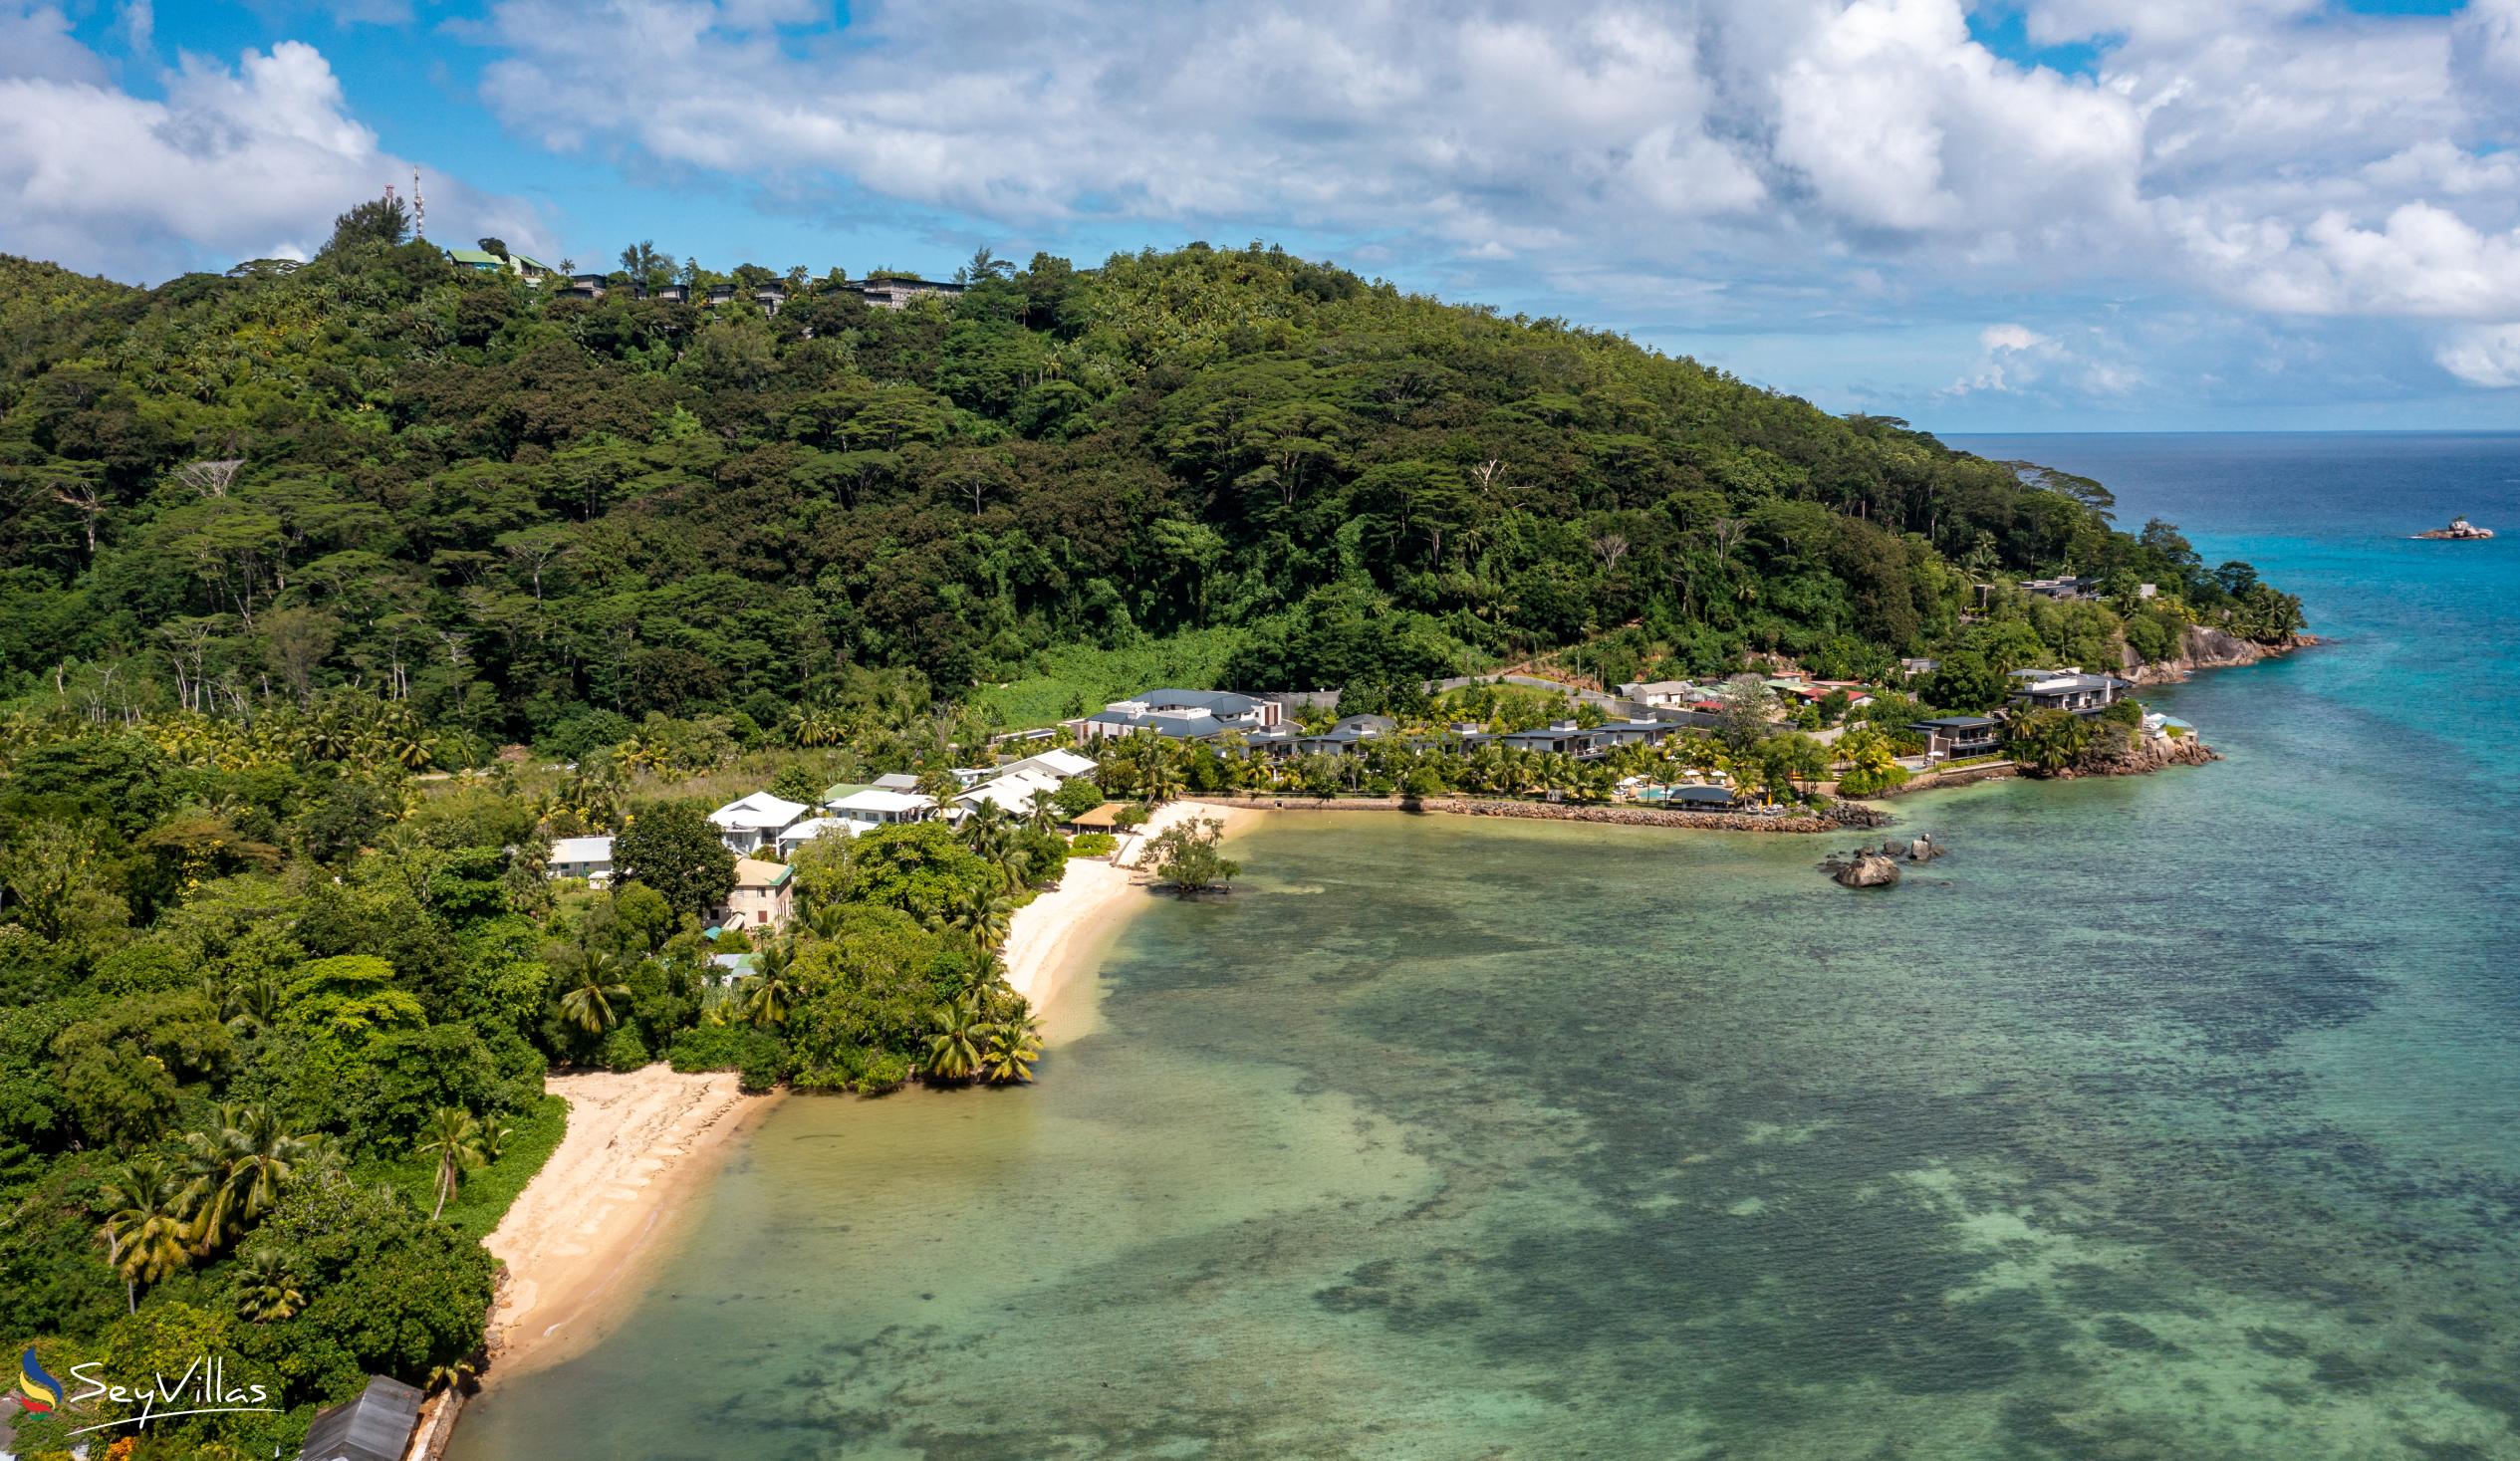 Foto 15: Paul's Residence - Posizione - Mahé (Seychelles)